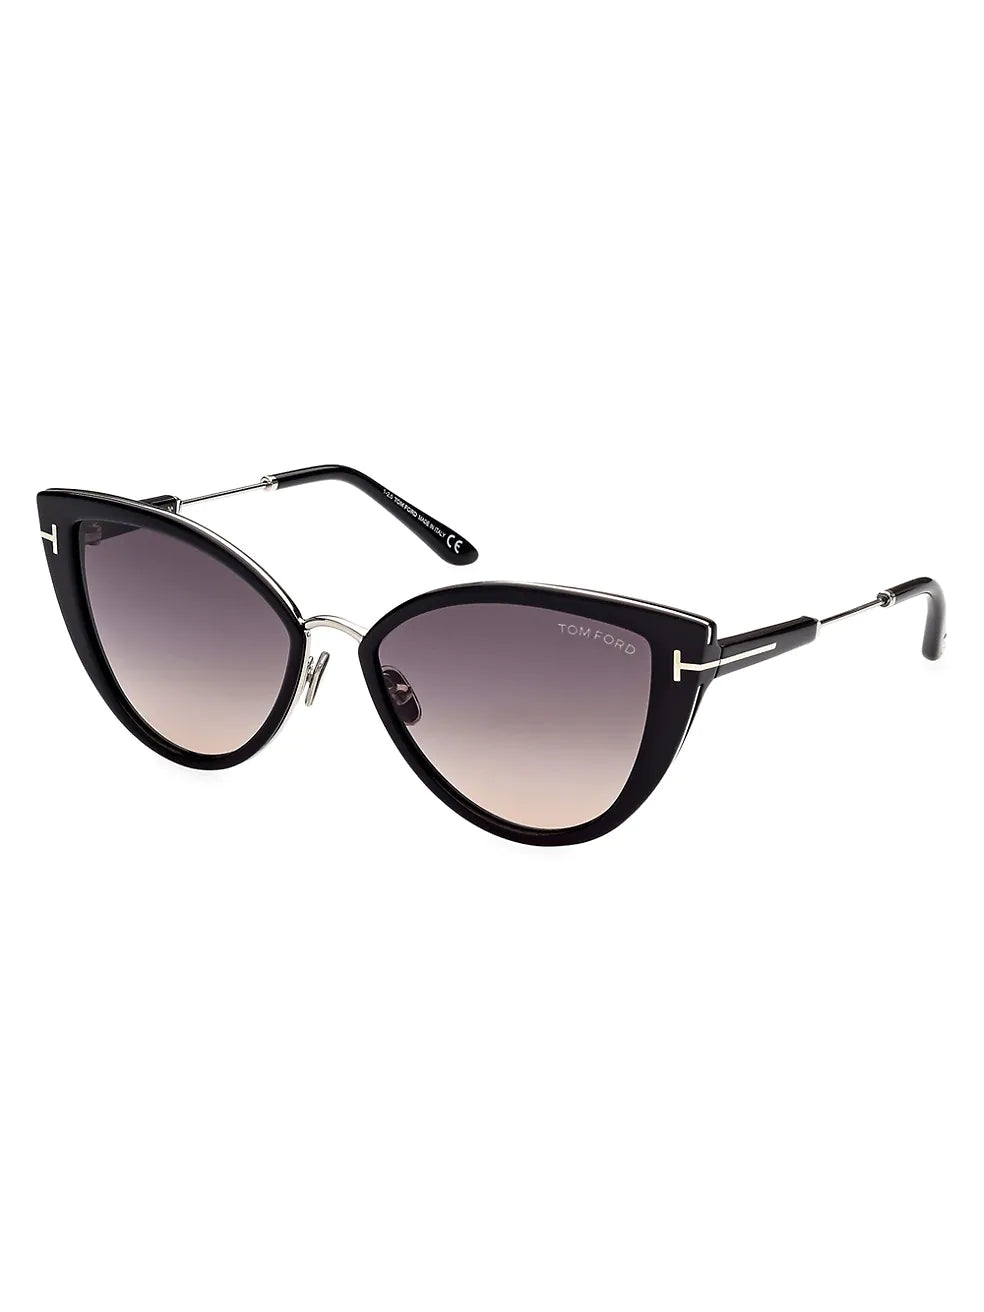 Anjelica Acetate Sunglasses in Shiny Black + Smoke Mirror